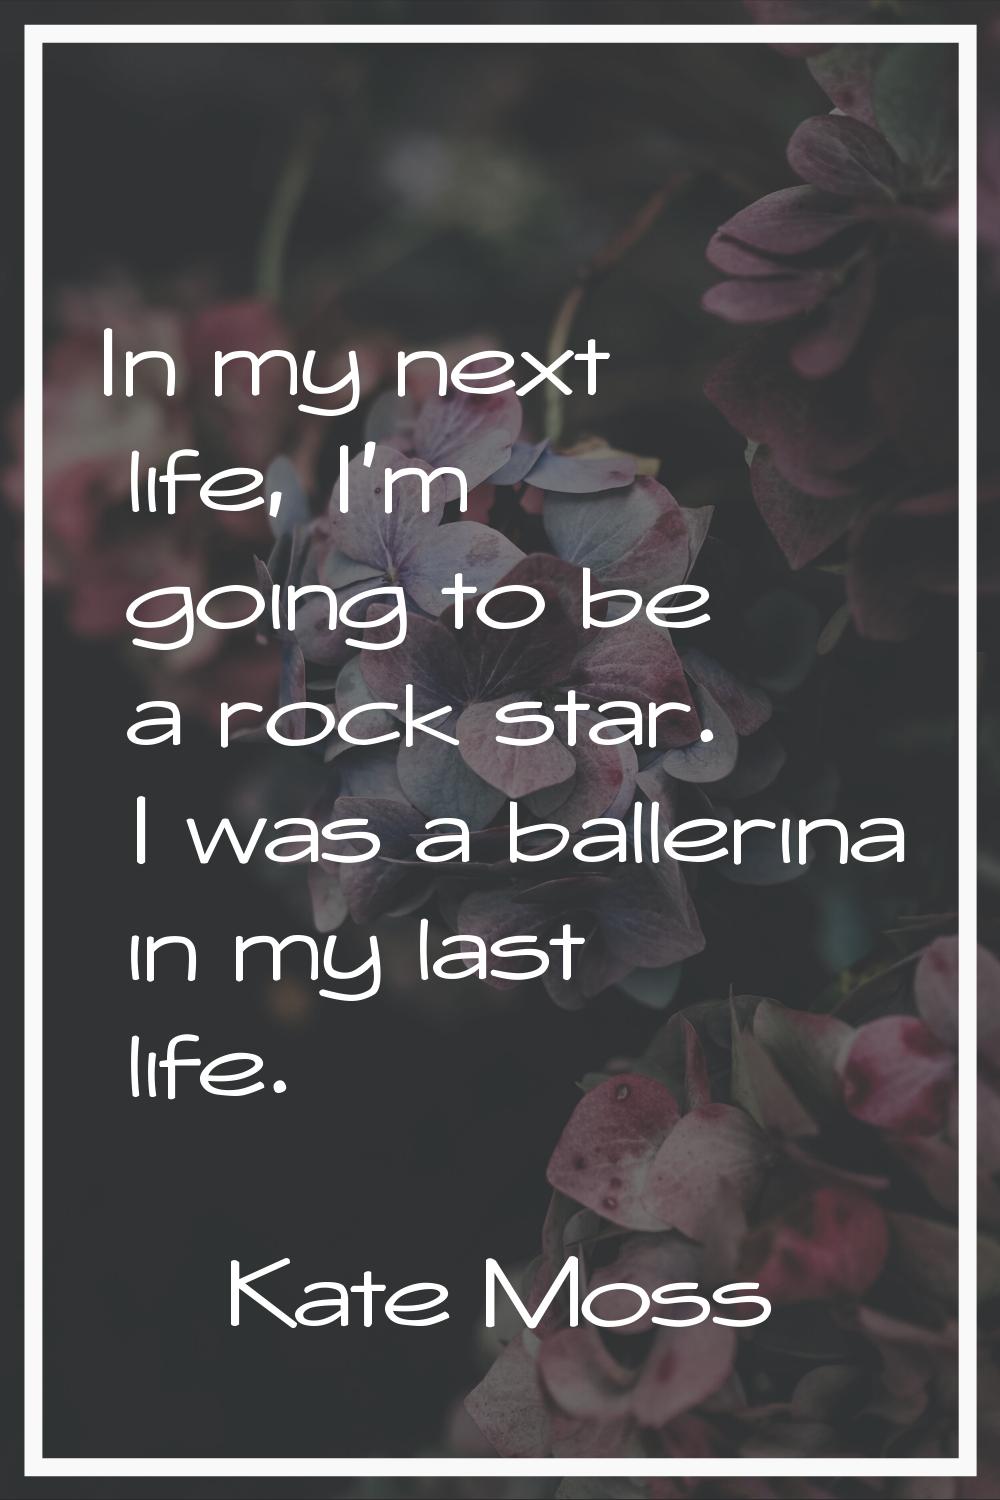 In my next life, I'm going to be a rock star. I was a ballerina in my last life.